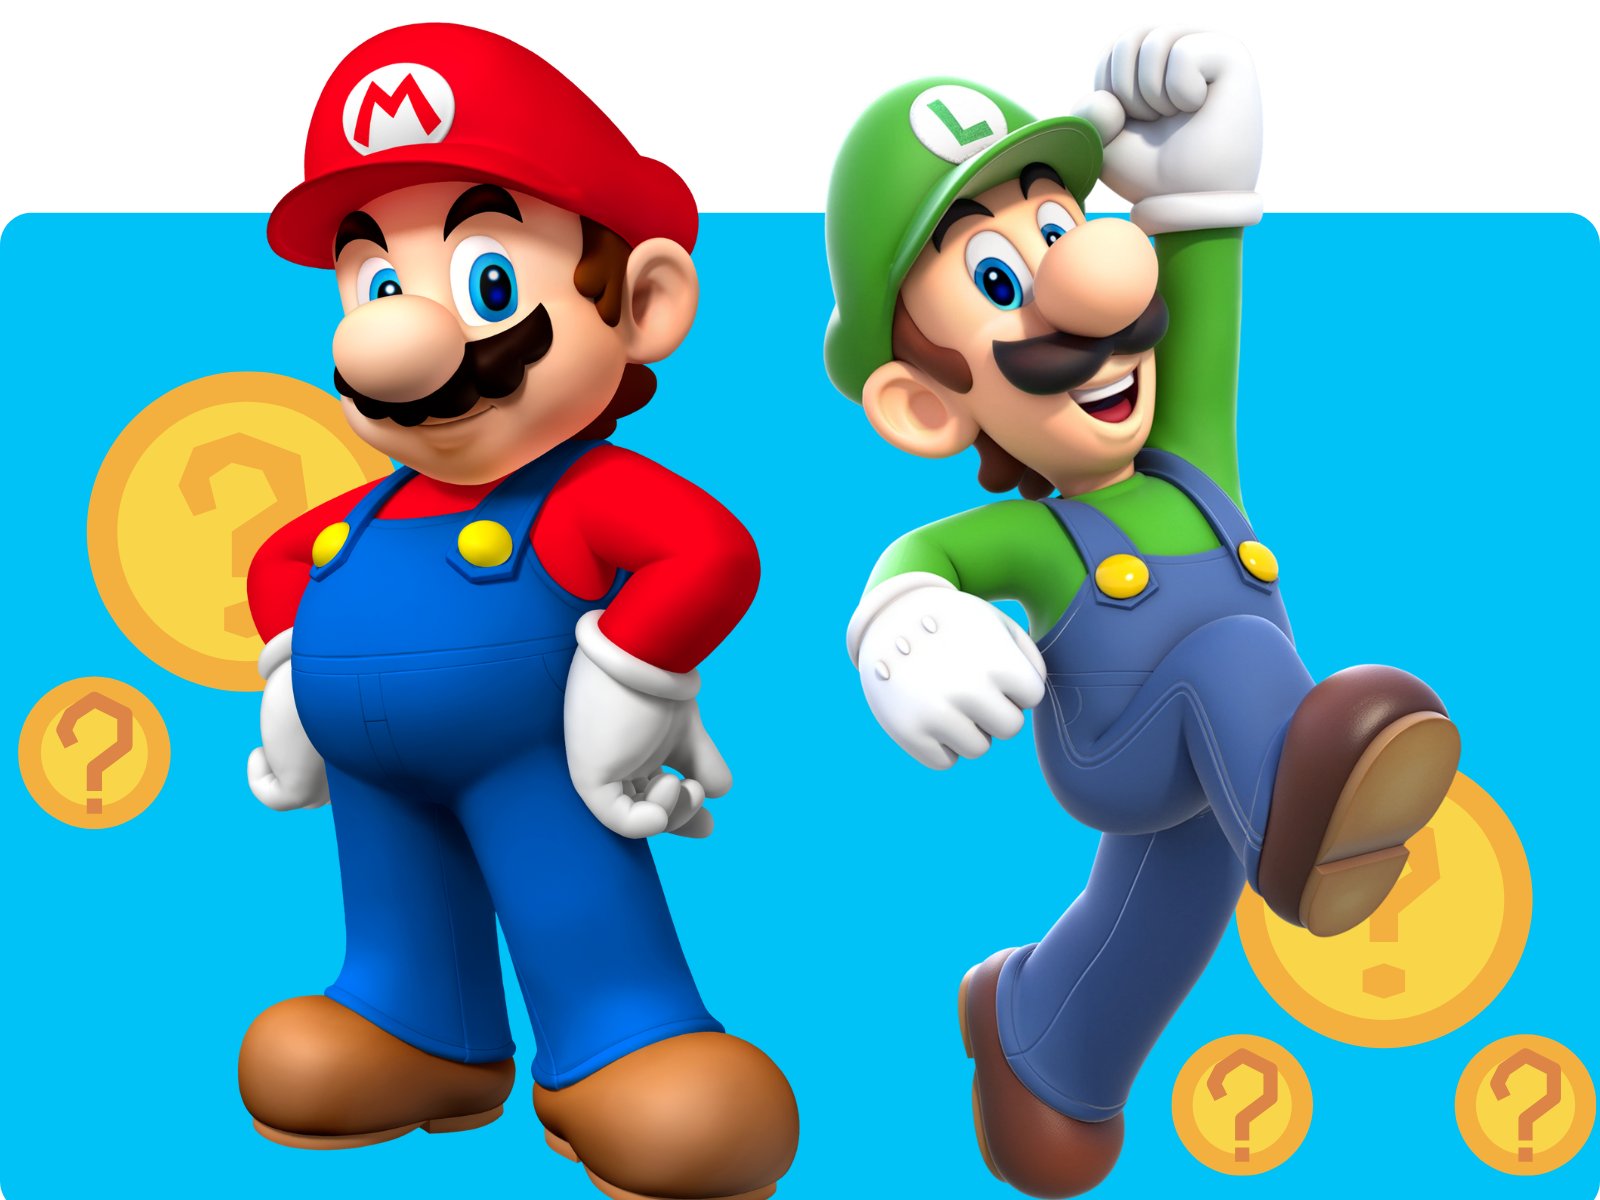 Super Mario Bros. 5-Pack Briefs Boys Underwear (6) : : Clothing,  Shoes & Accessories